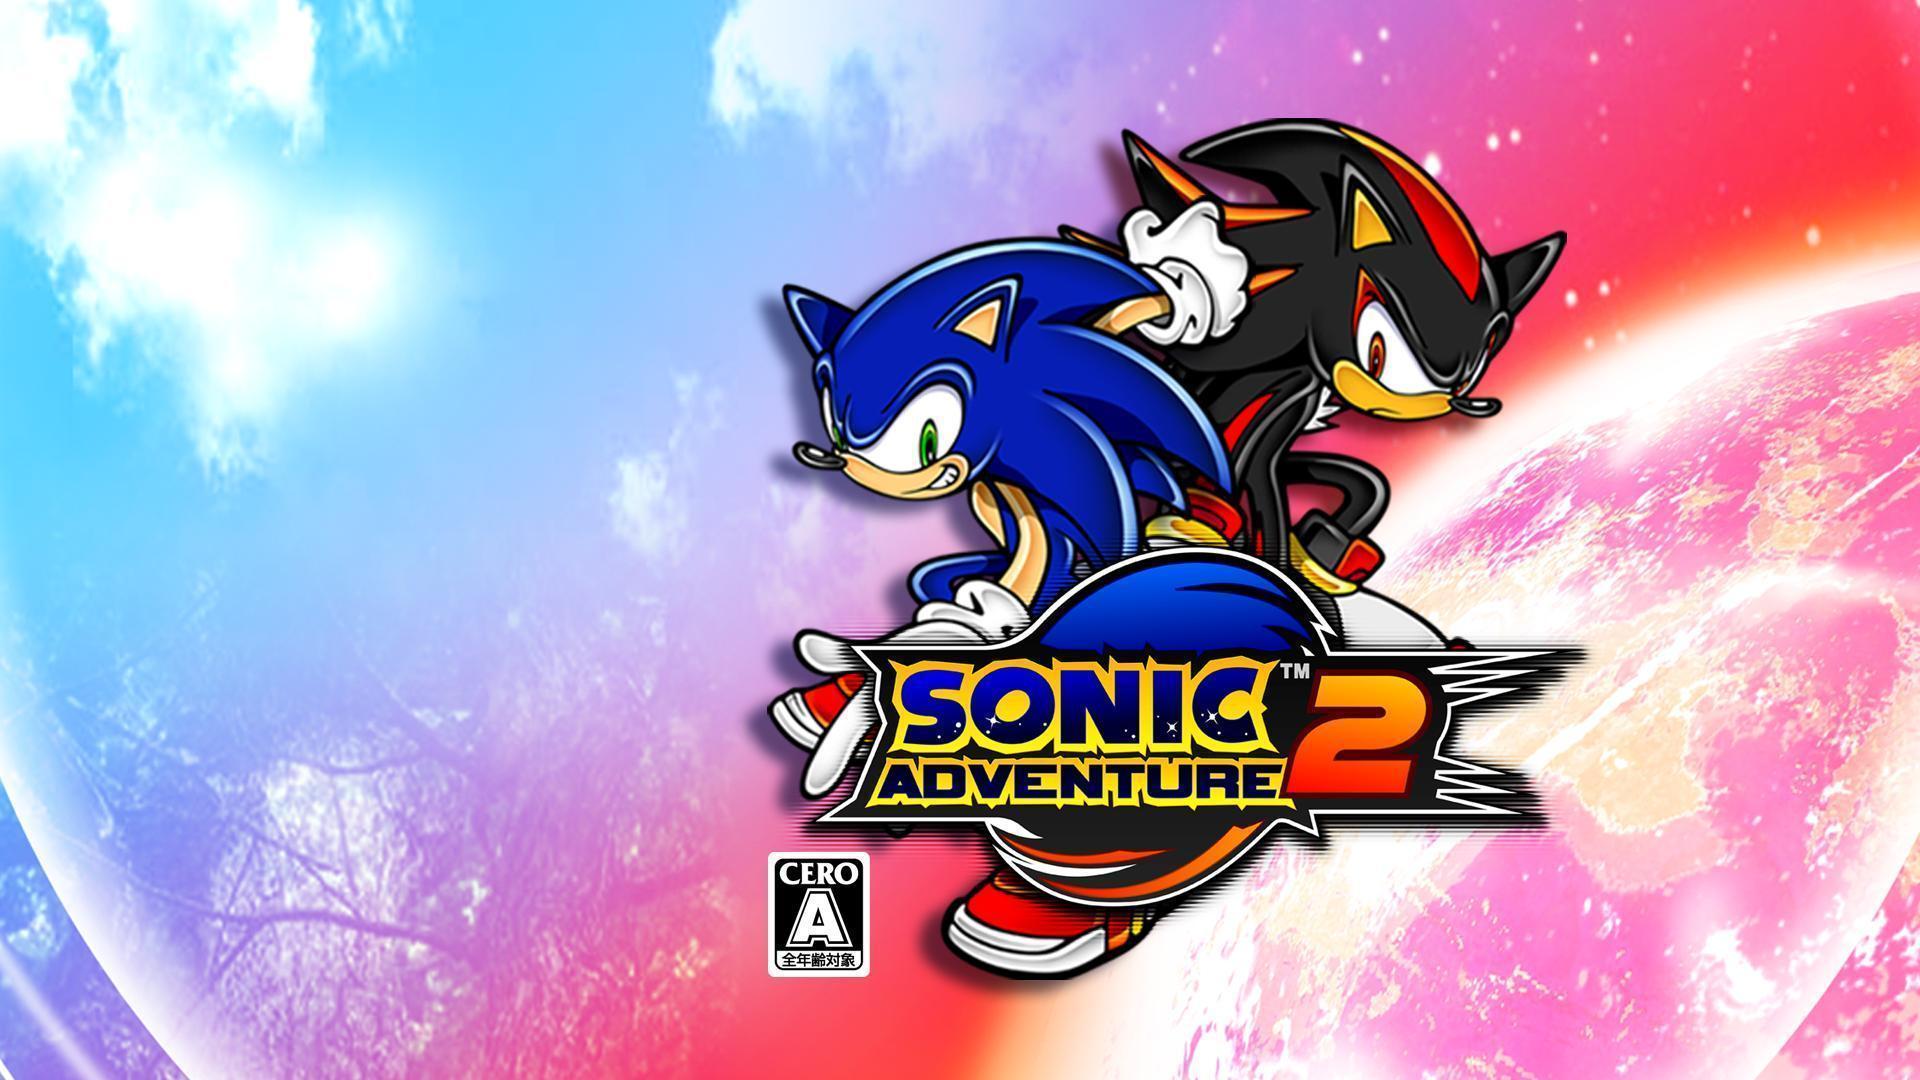 Sonic adventure 2 battle free online game